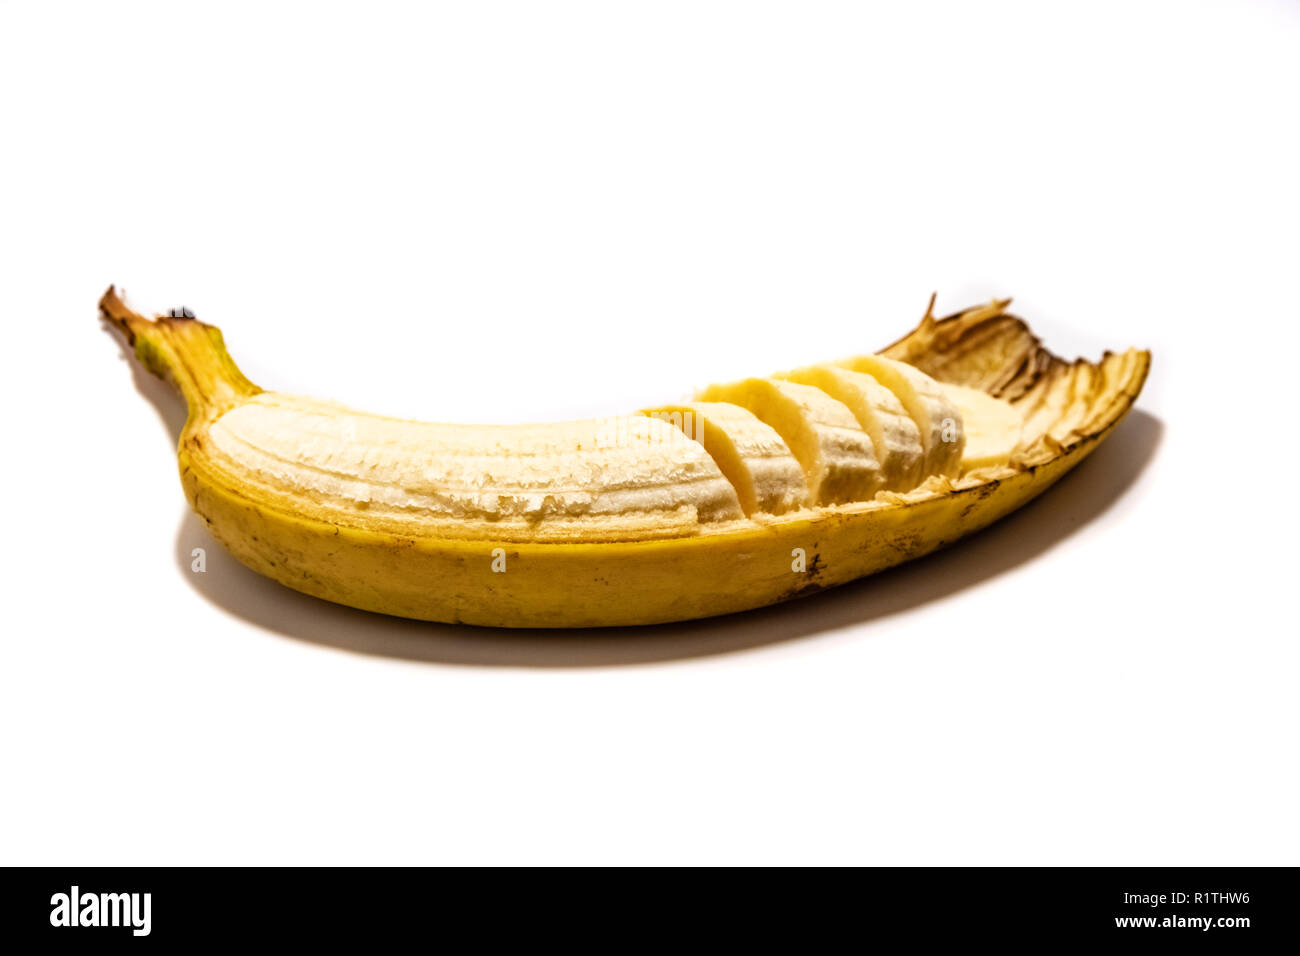 Sliced banana peel on a white background 2018 Stock Photo